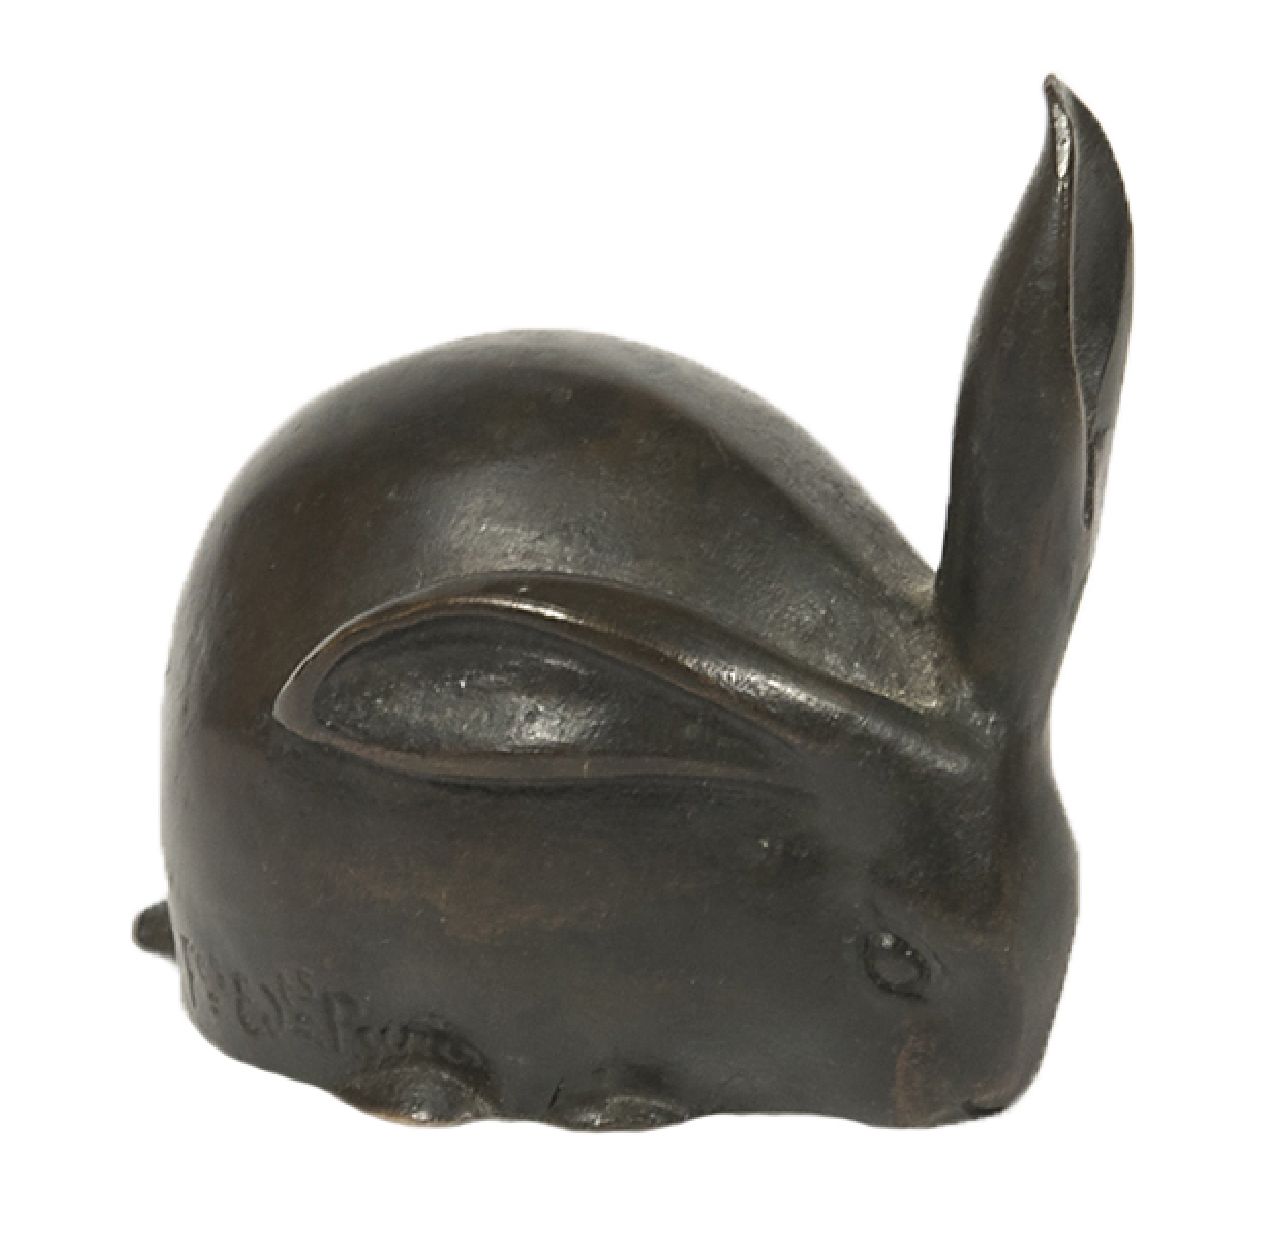 Sandoz E.M.E.  | Édouard Marcel Émile Sandoz | Sculptures and objects offered for sale | Rabbit, bronze 6.6 x 7.0 cm, signed on the base